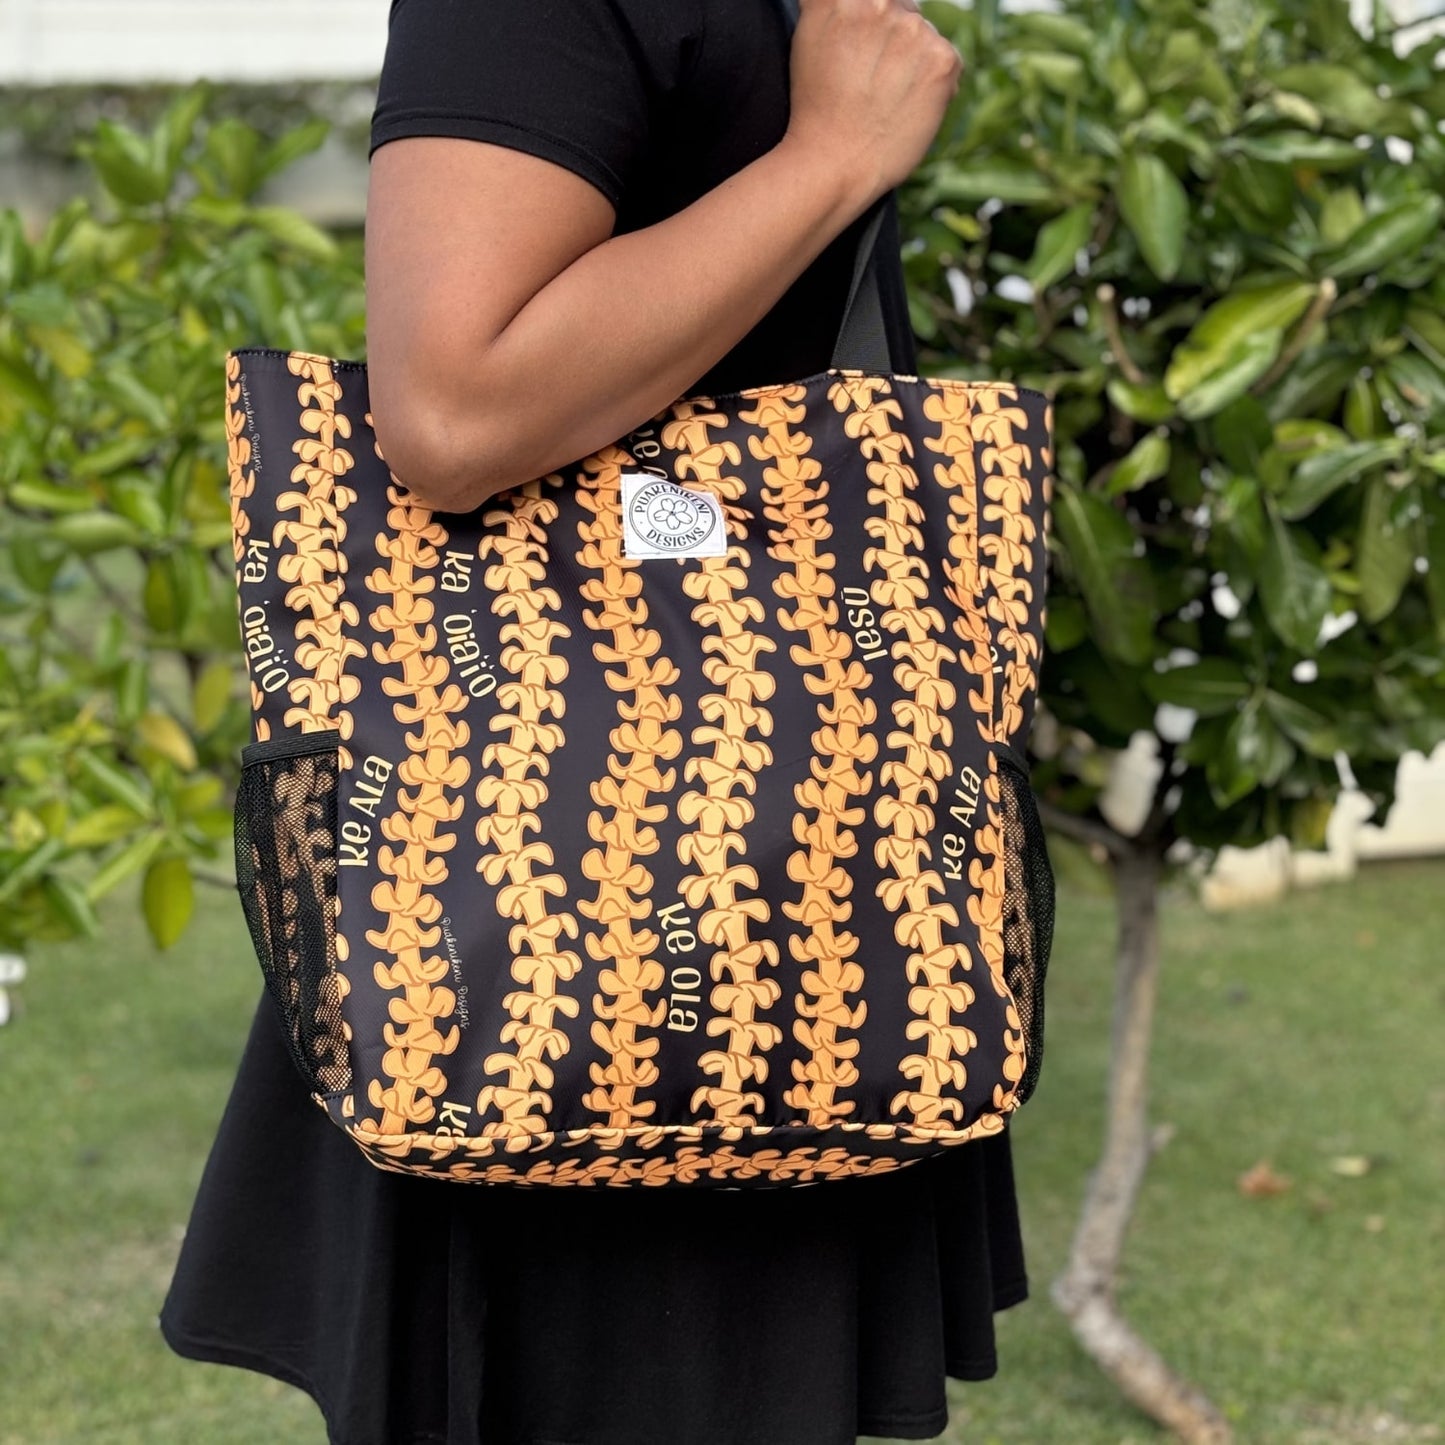 Holoholo Bag for travel, beach, hula, with puakenikeni lei Christian Faith collection by Puakenikeni Designs on shoulder of model